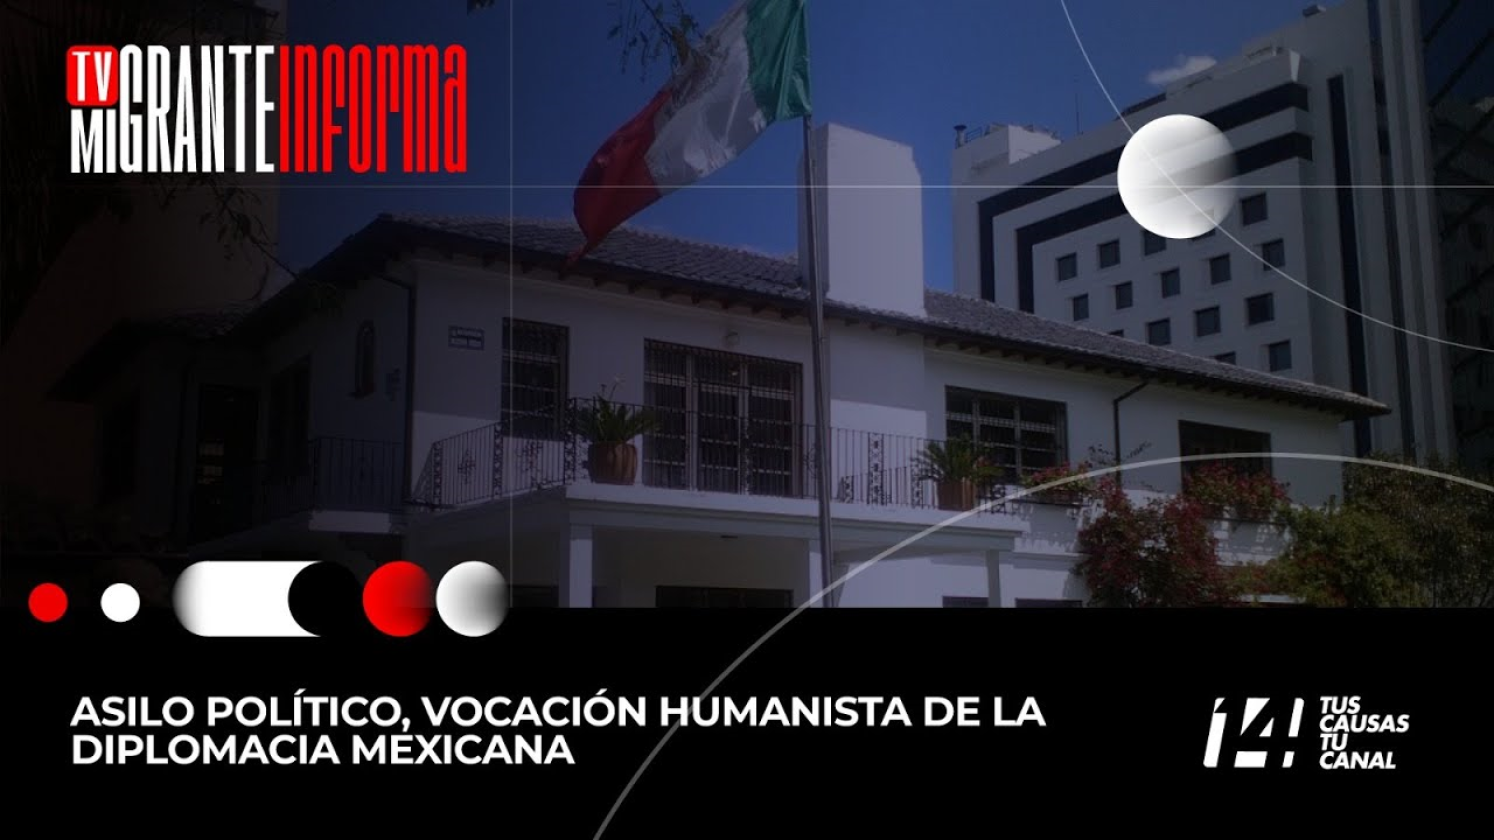 Asilo político, vocación humanista de la diplomacia mexicana